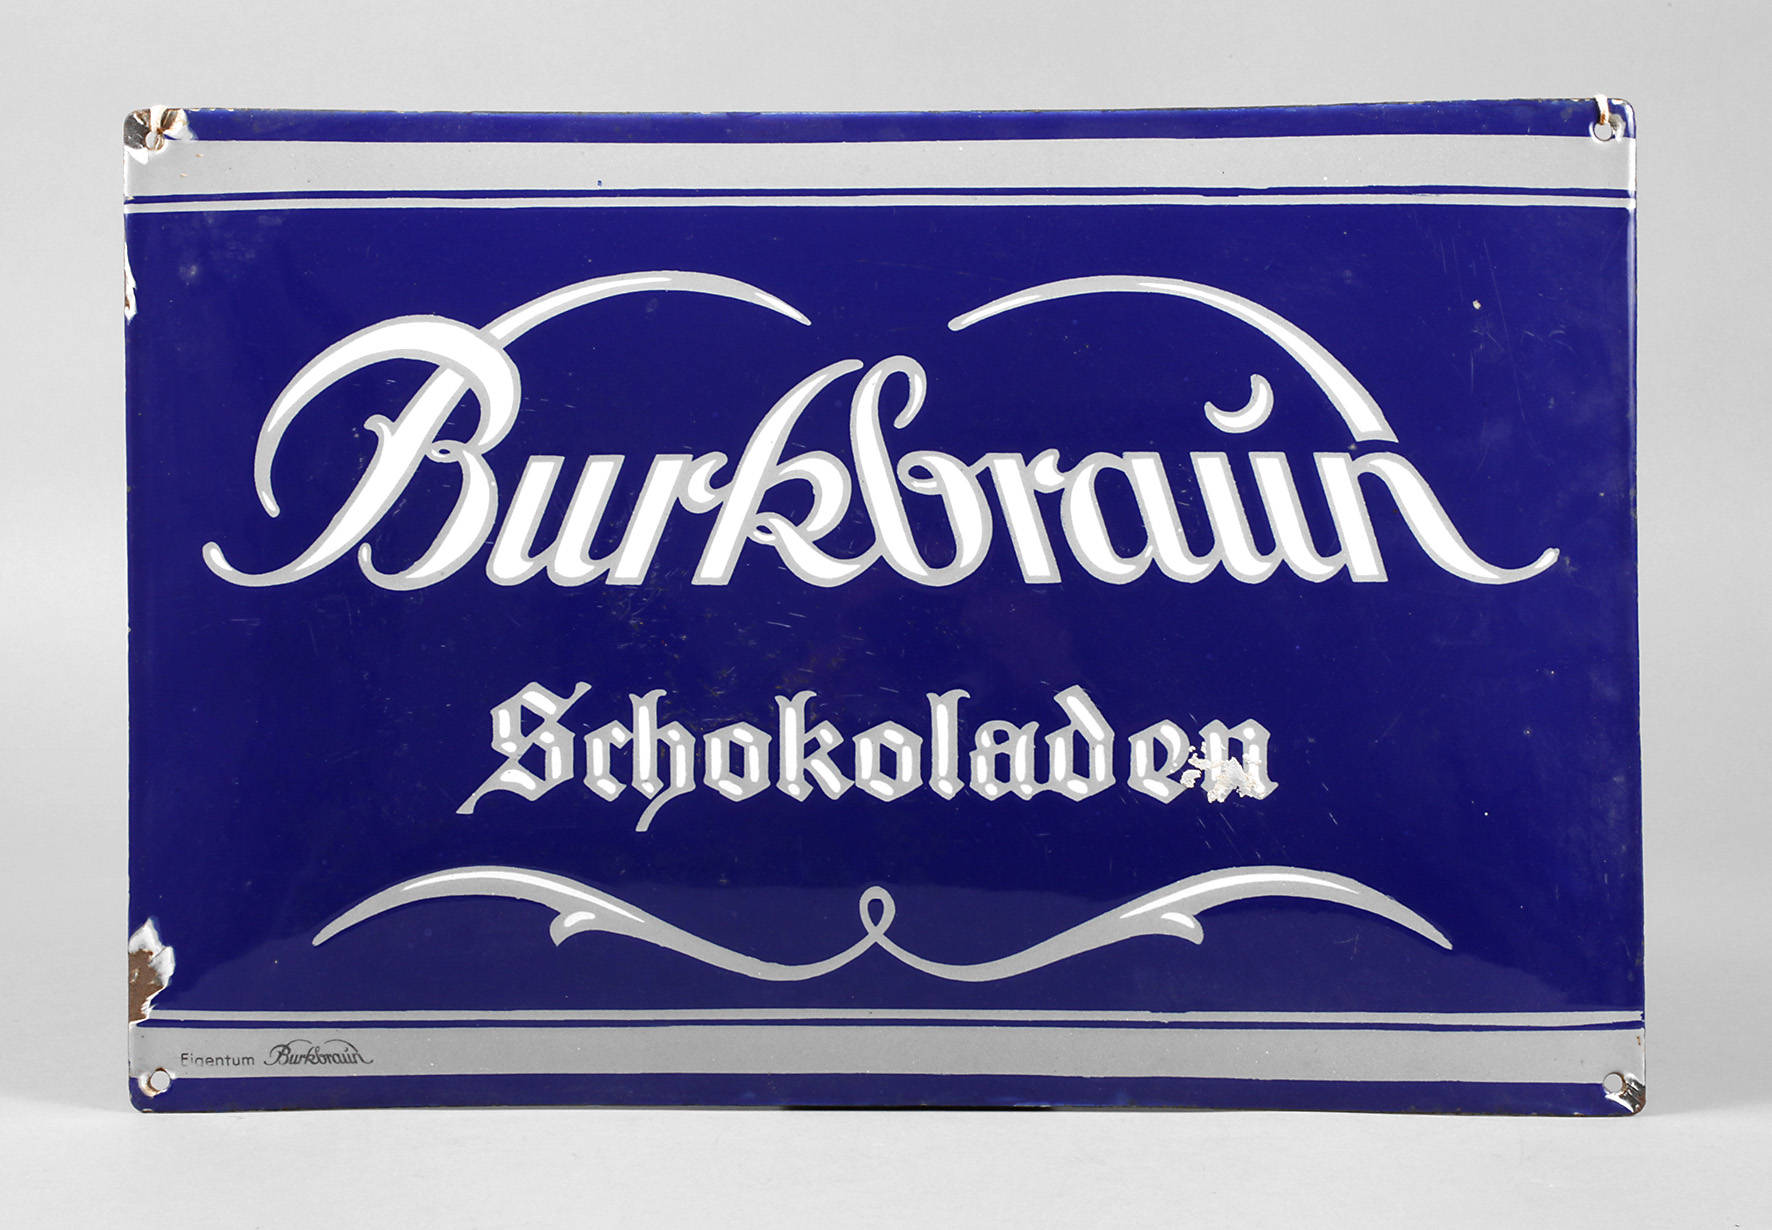 Emailleschild Burkbraun-Schokoladen